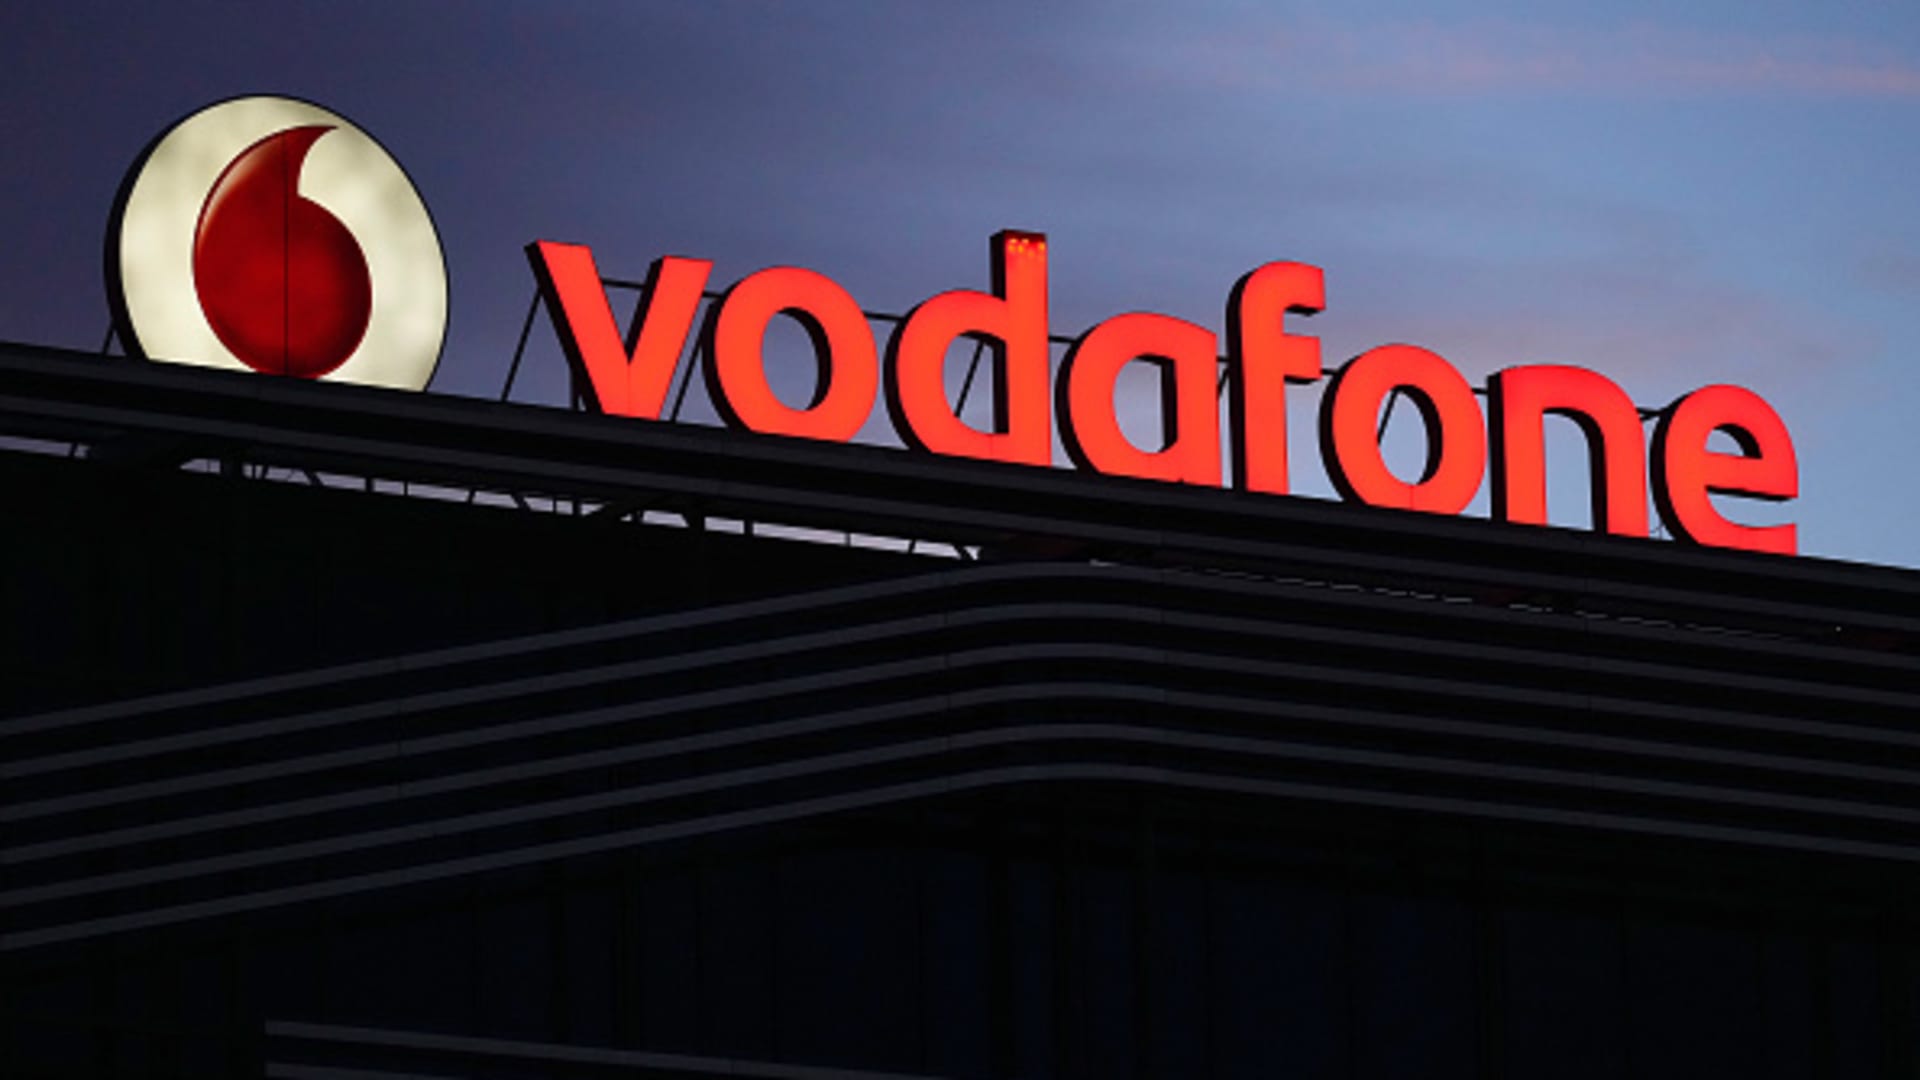 Vodafone shares drop 4% after cutting a record 11,000 jobs